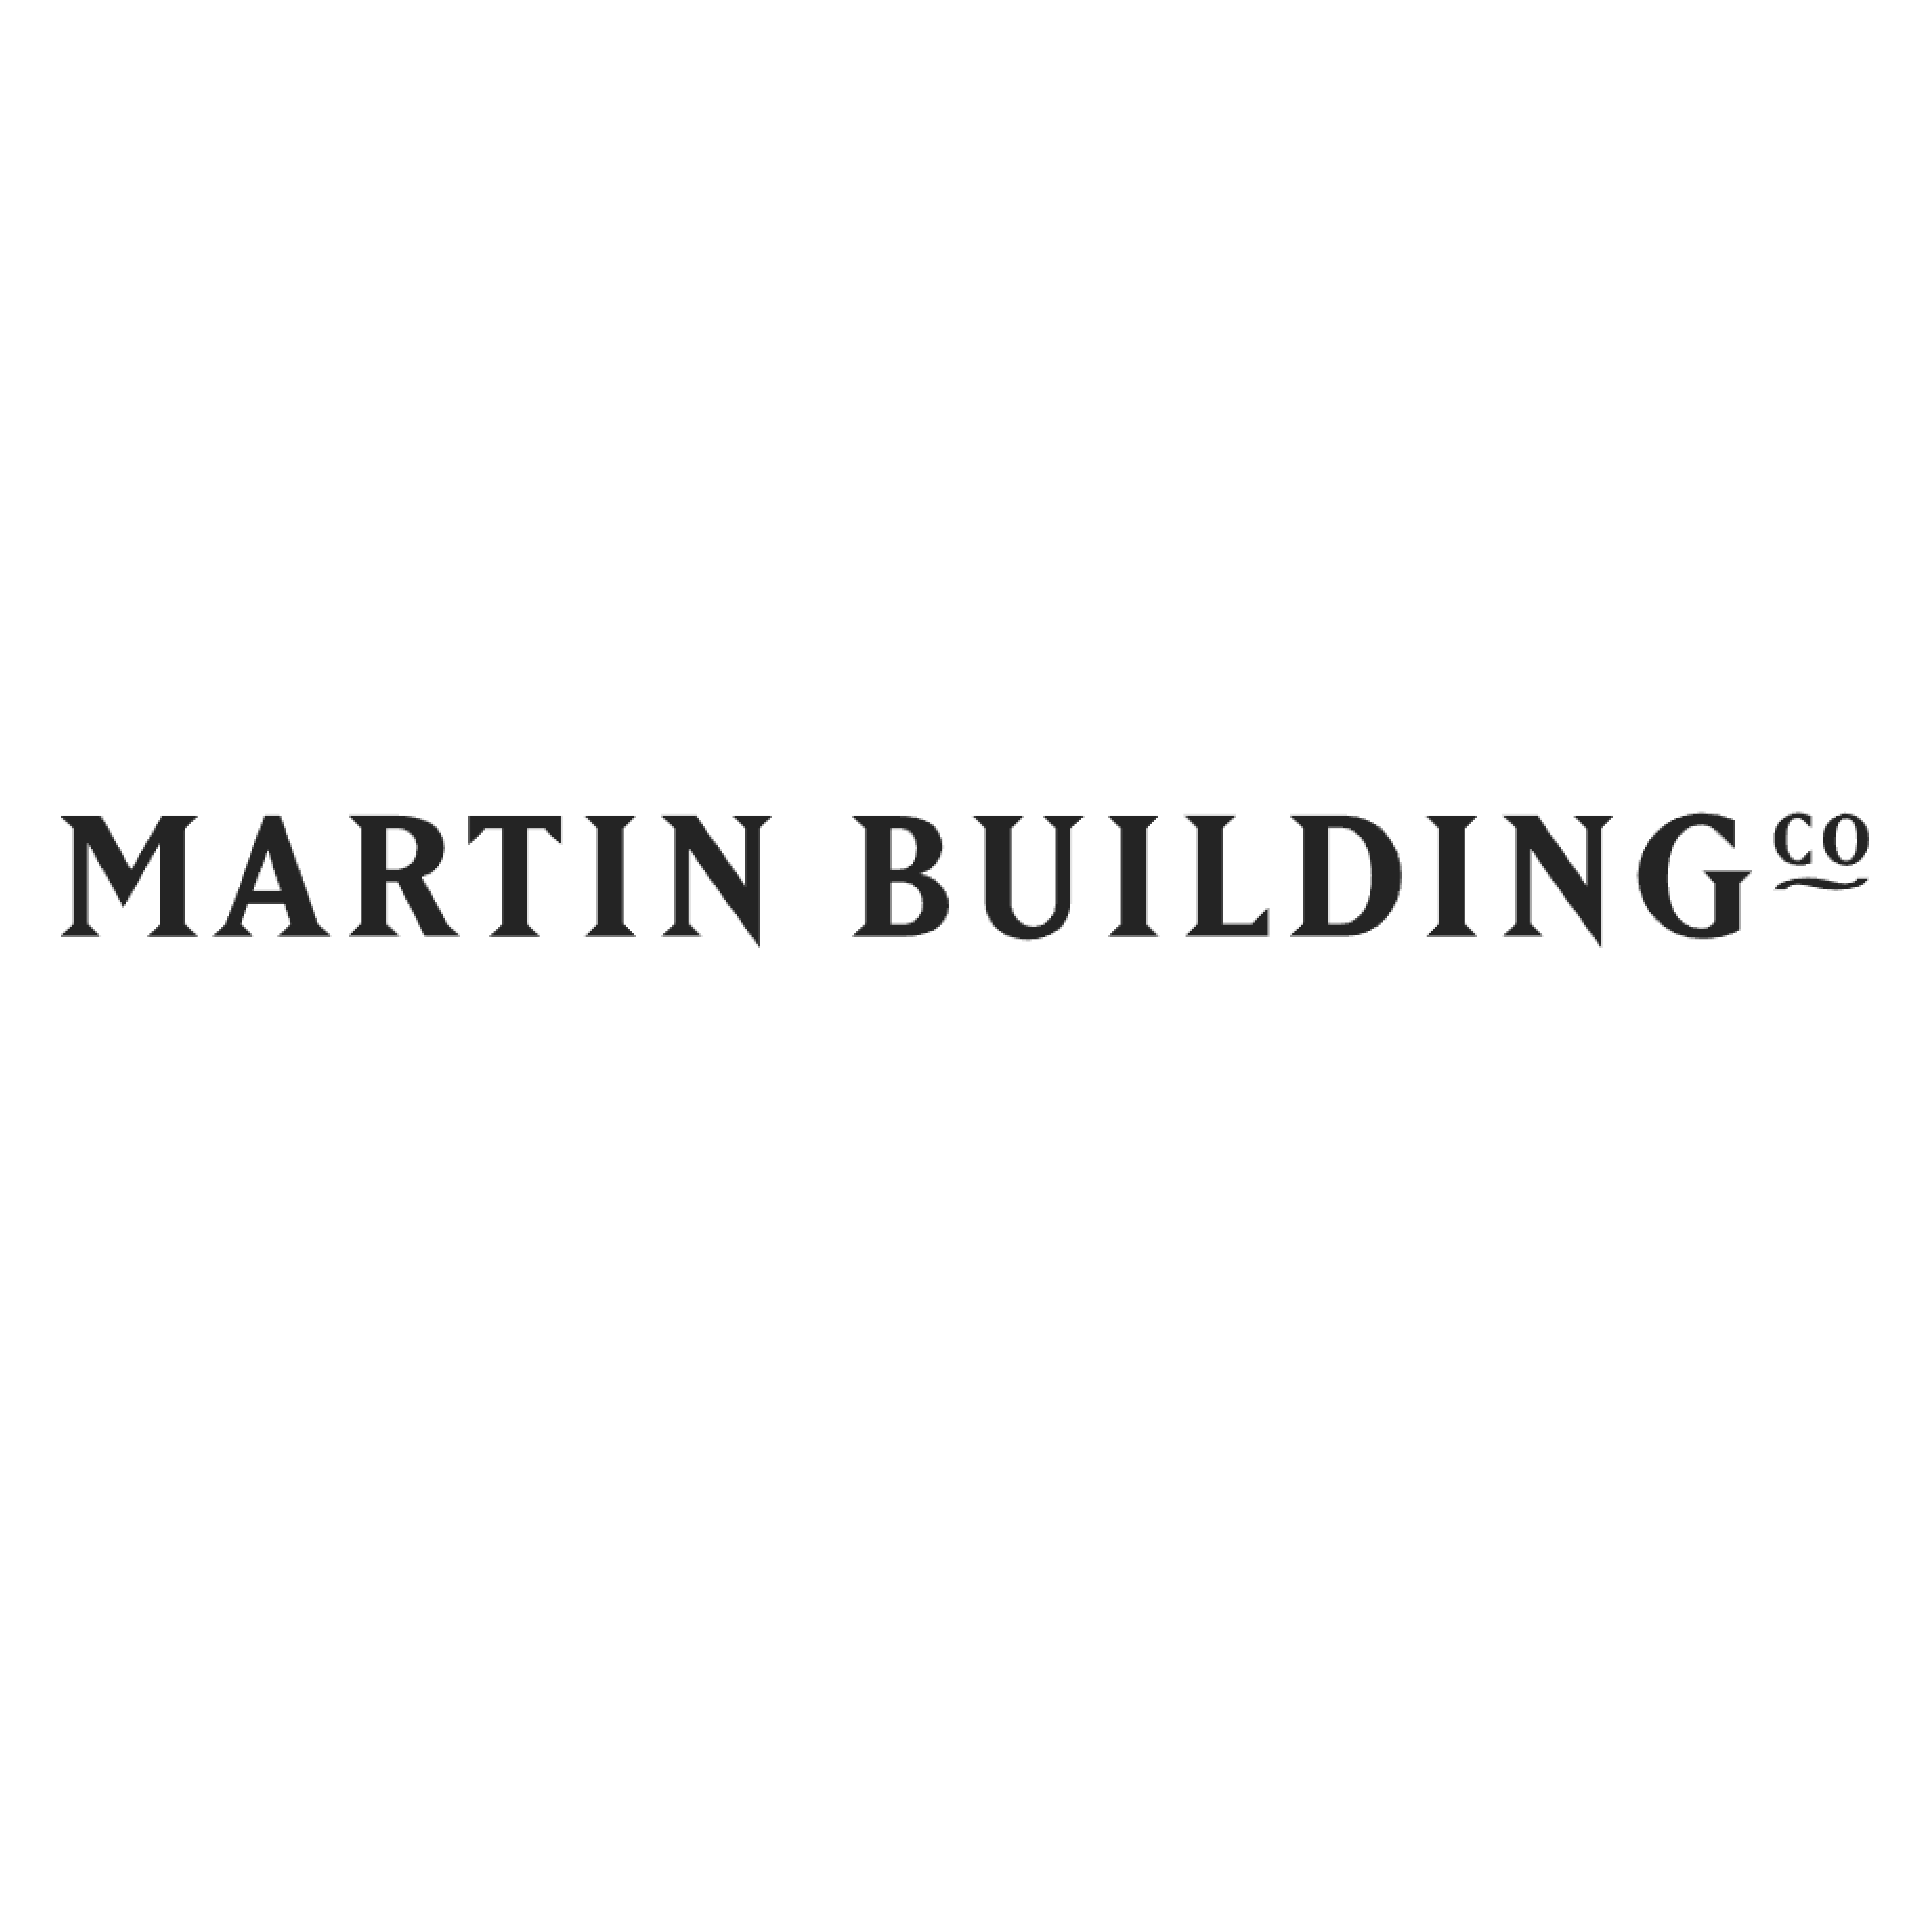 Martin Building Co